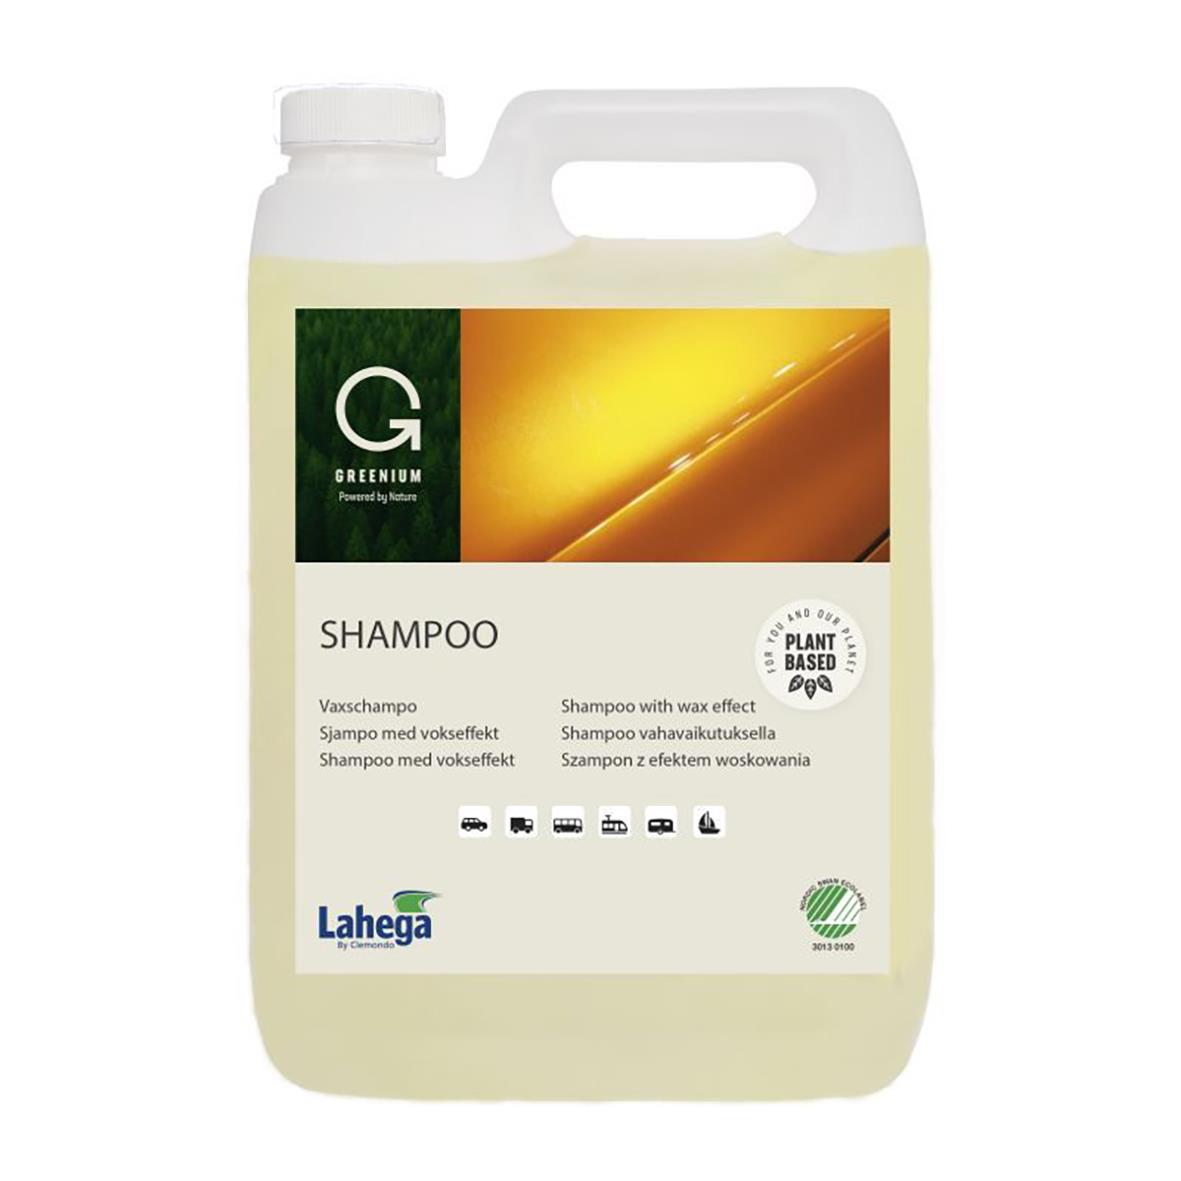 Shampoo Lahega Greenium 5L 52302640